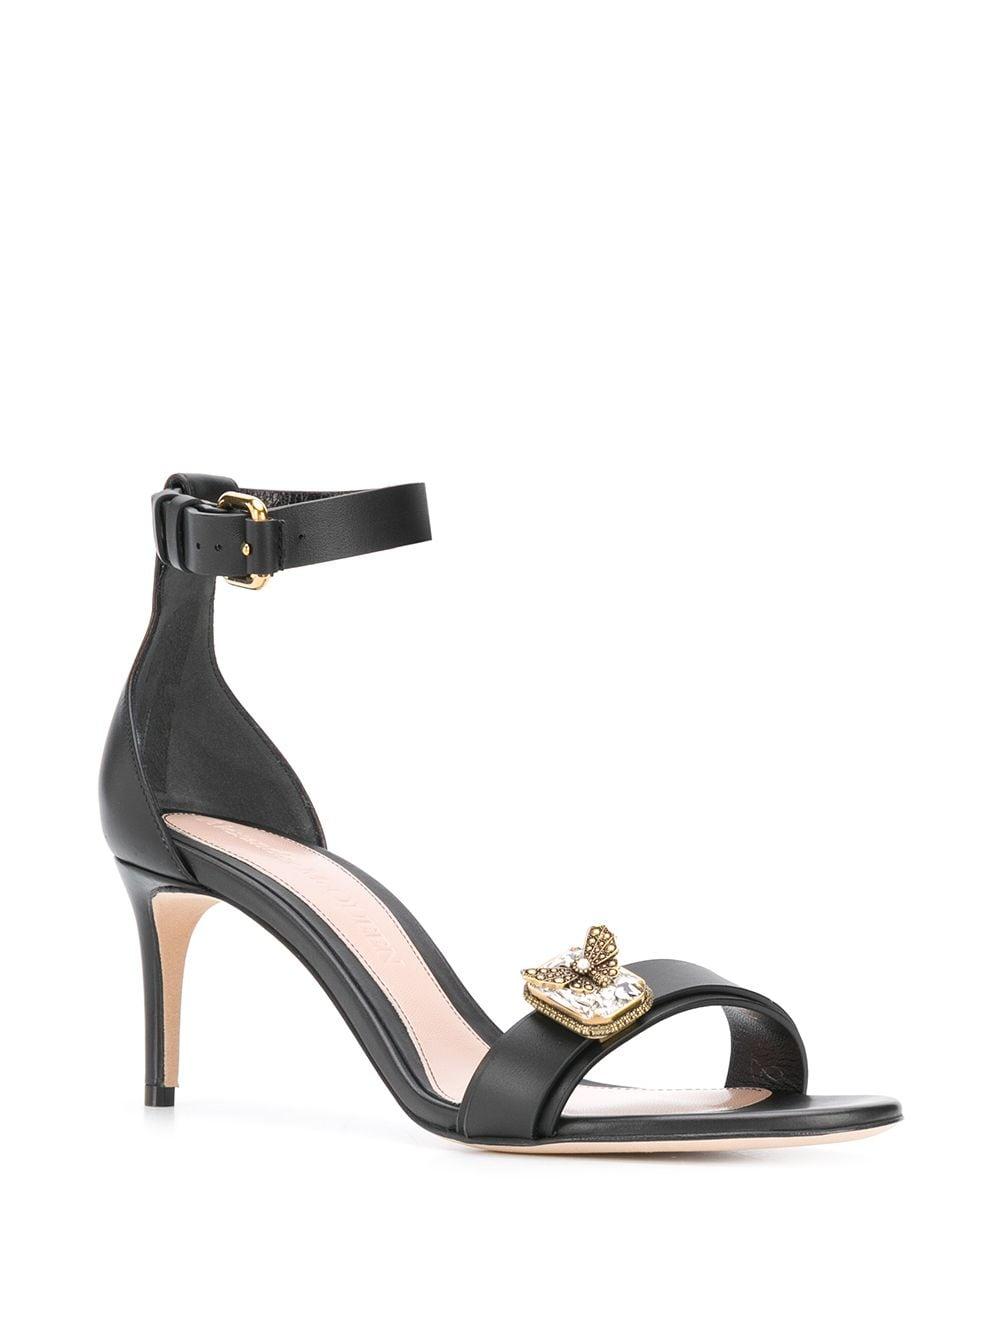 Alexander McQueen Jewel Strap Sandals in Black - Lyst